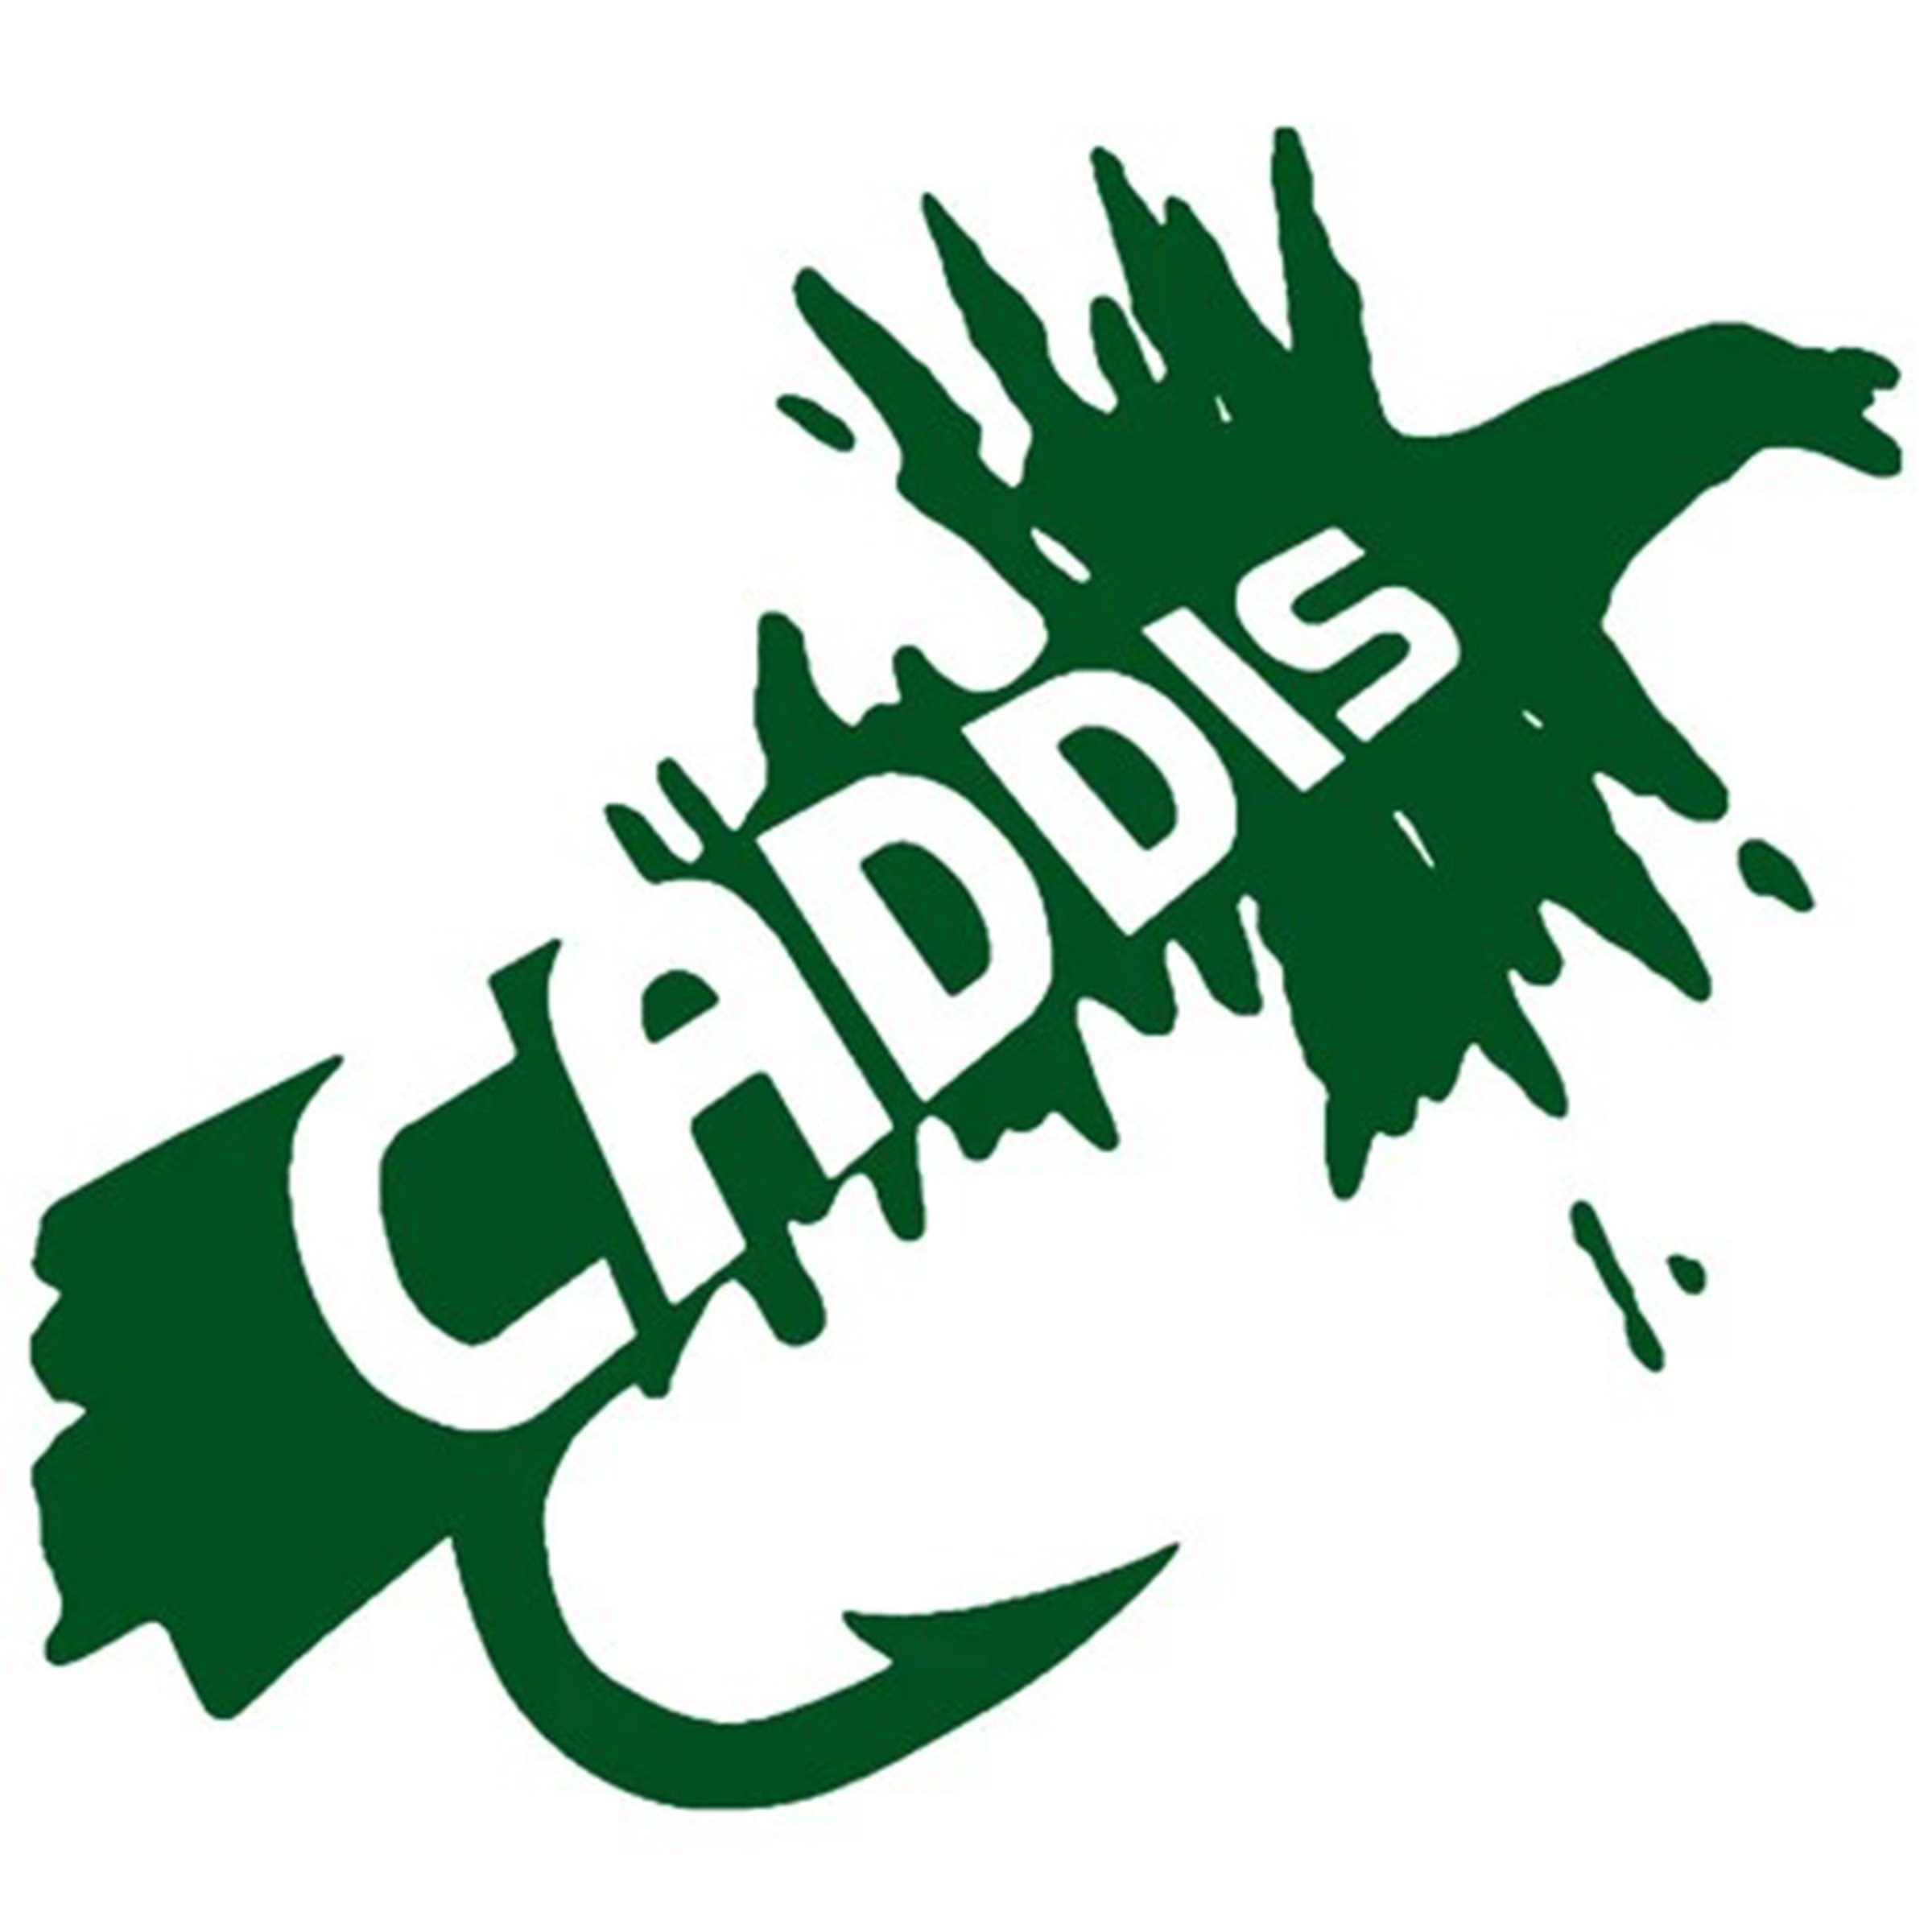 815-Caddis